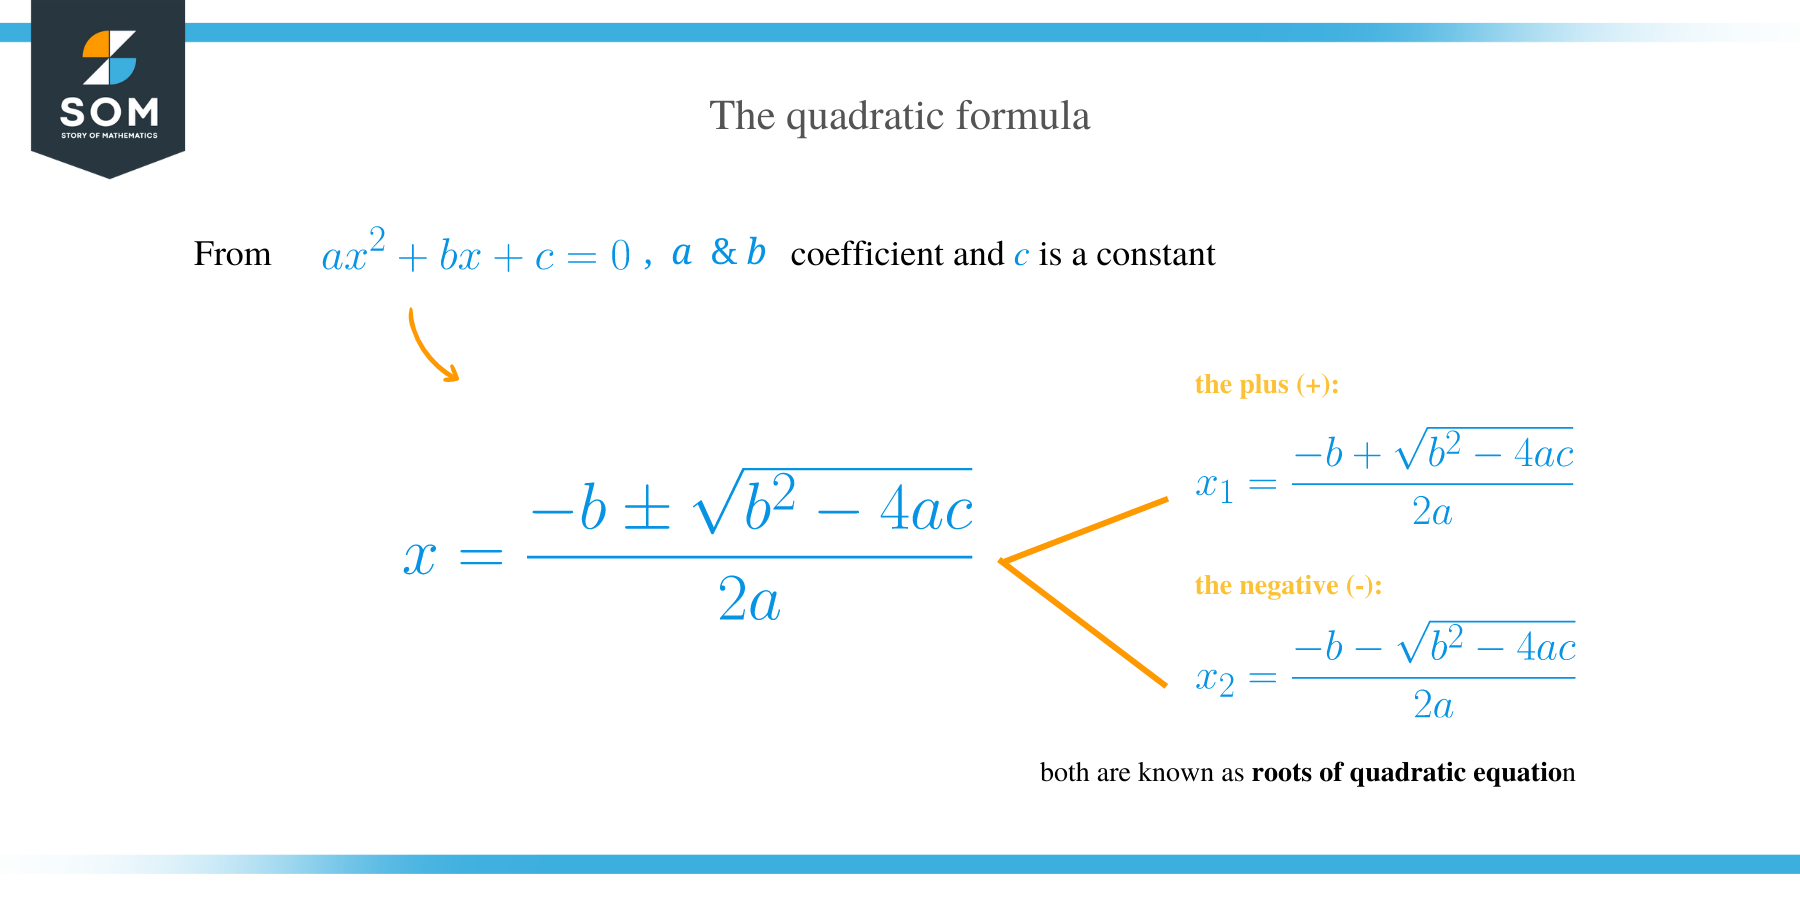 quadratic equation formula